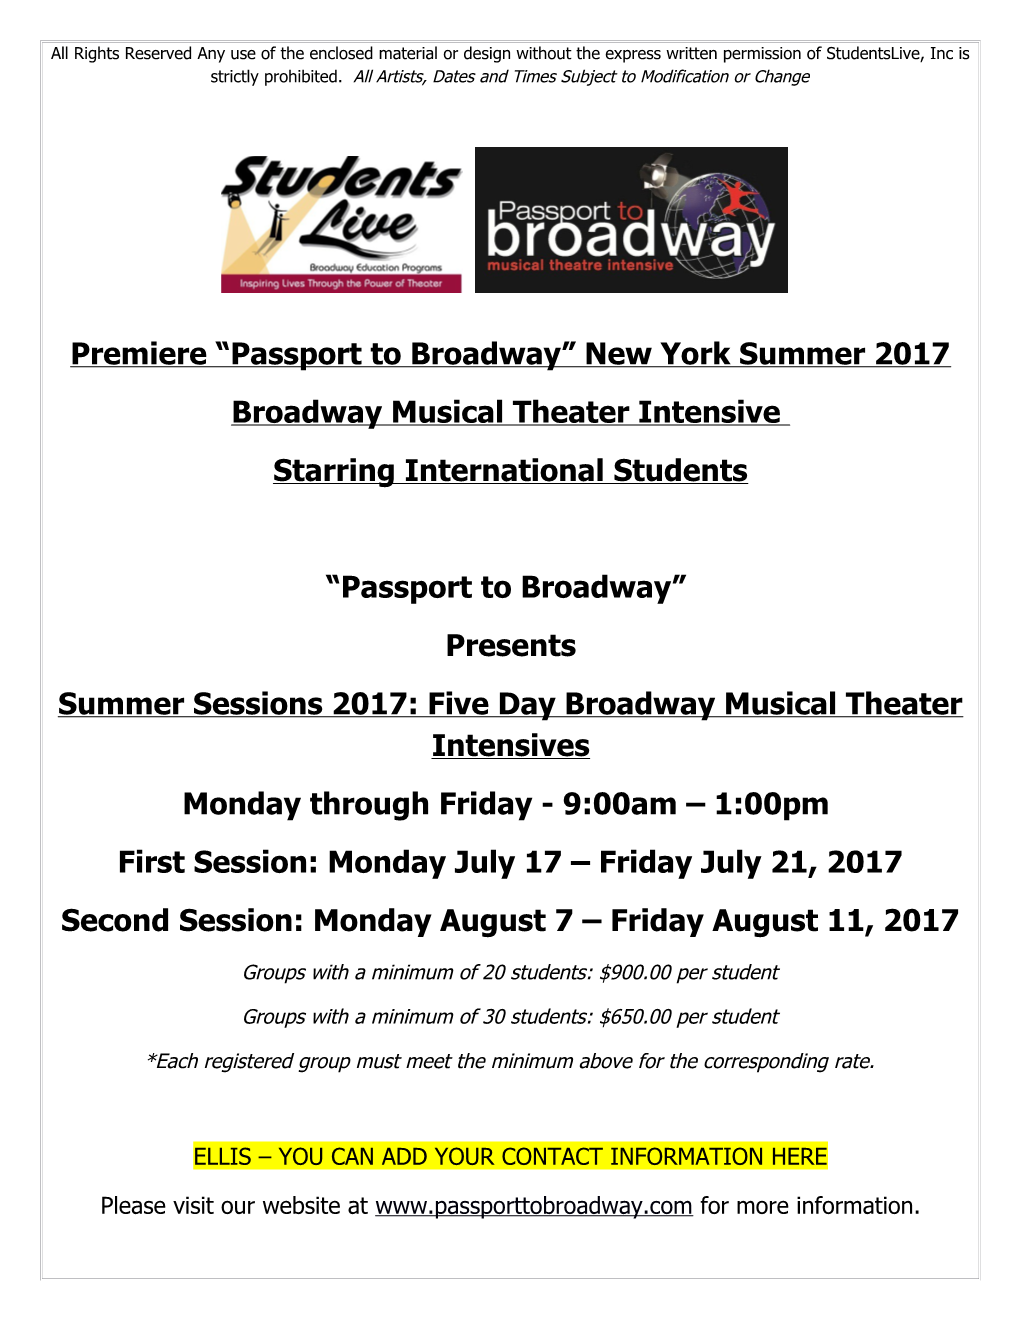 Studentslive, Passport to Broadway Presents